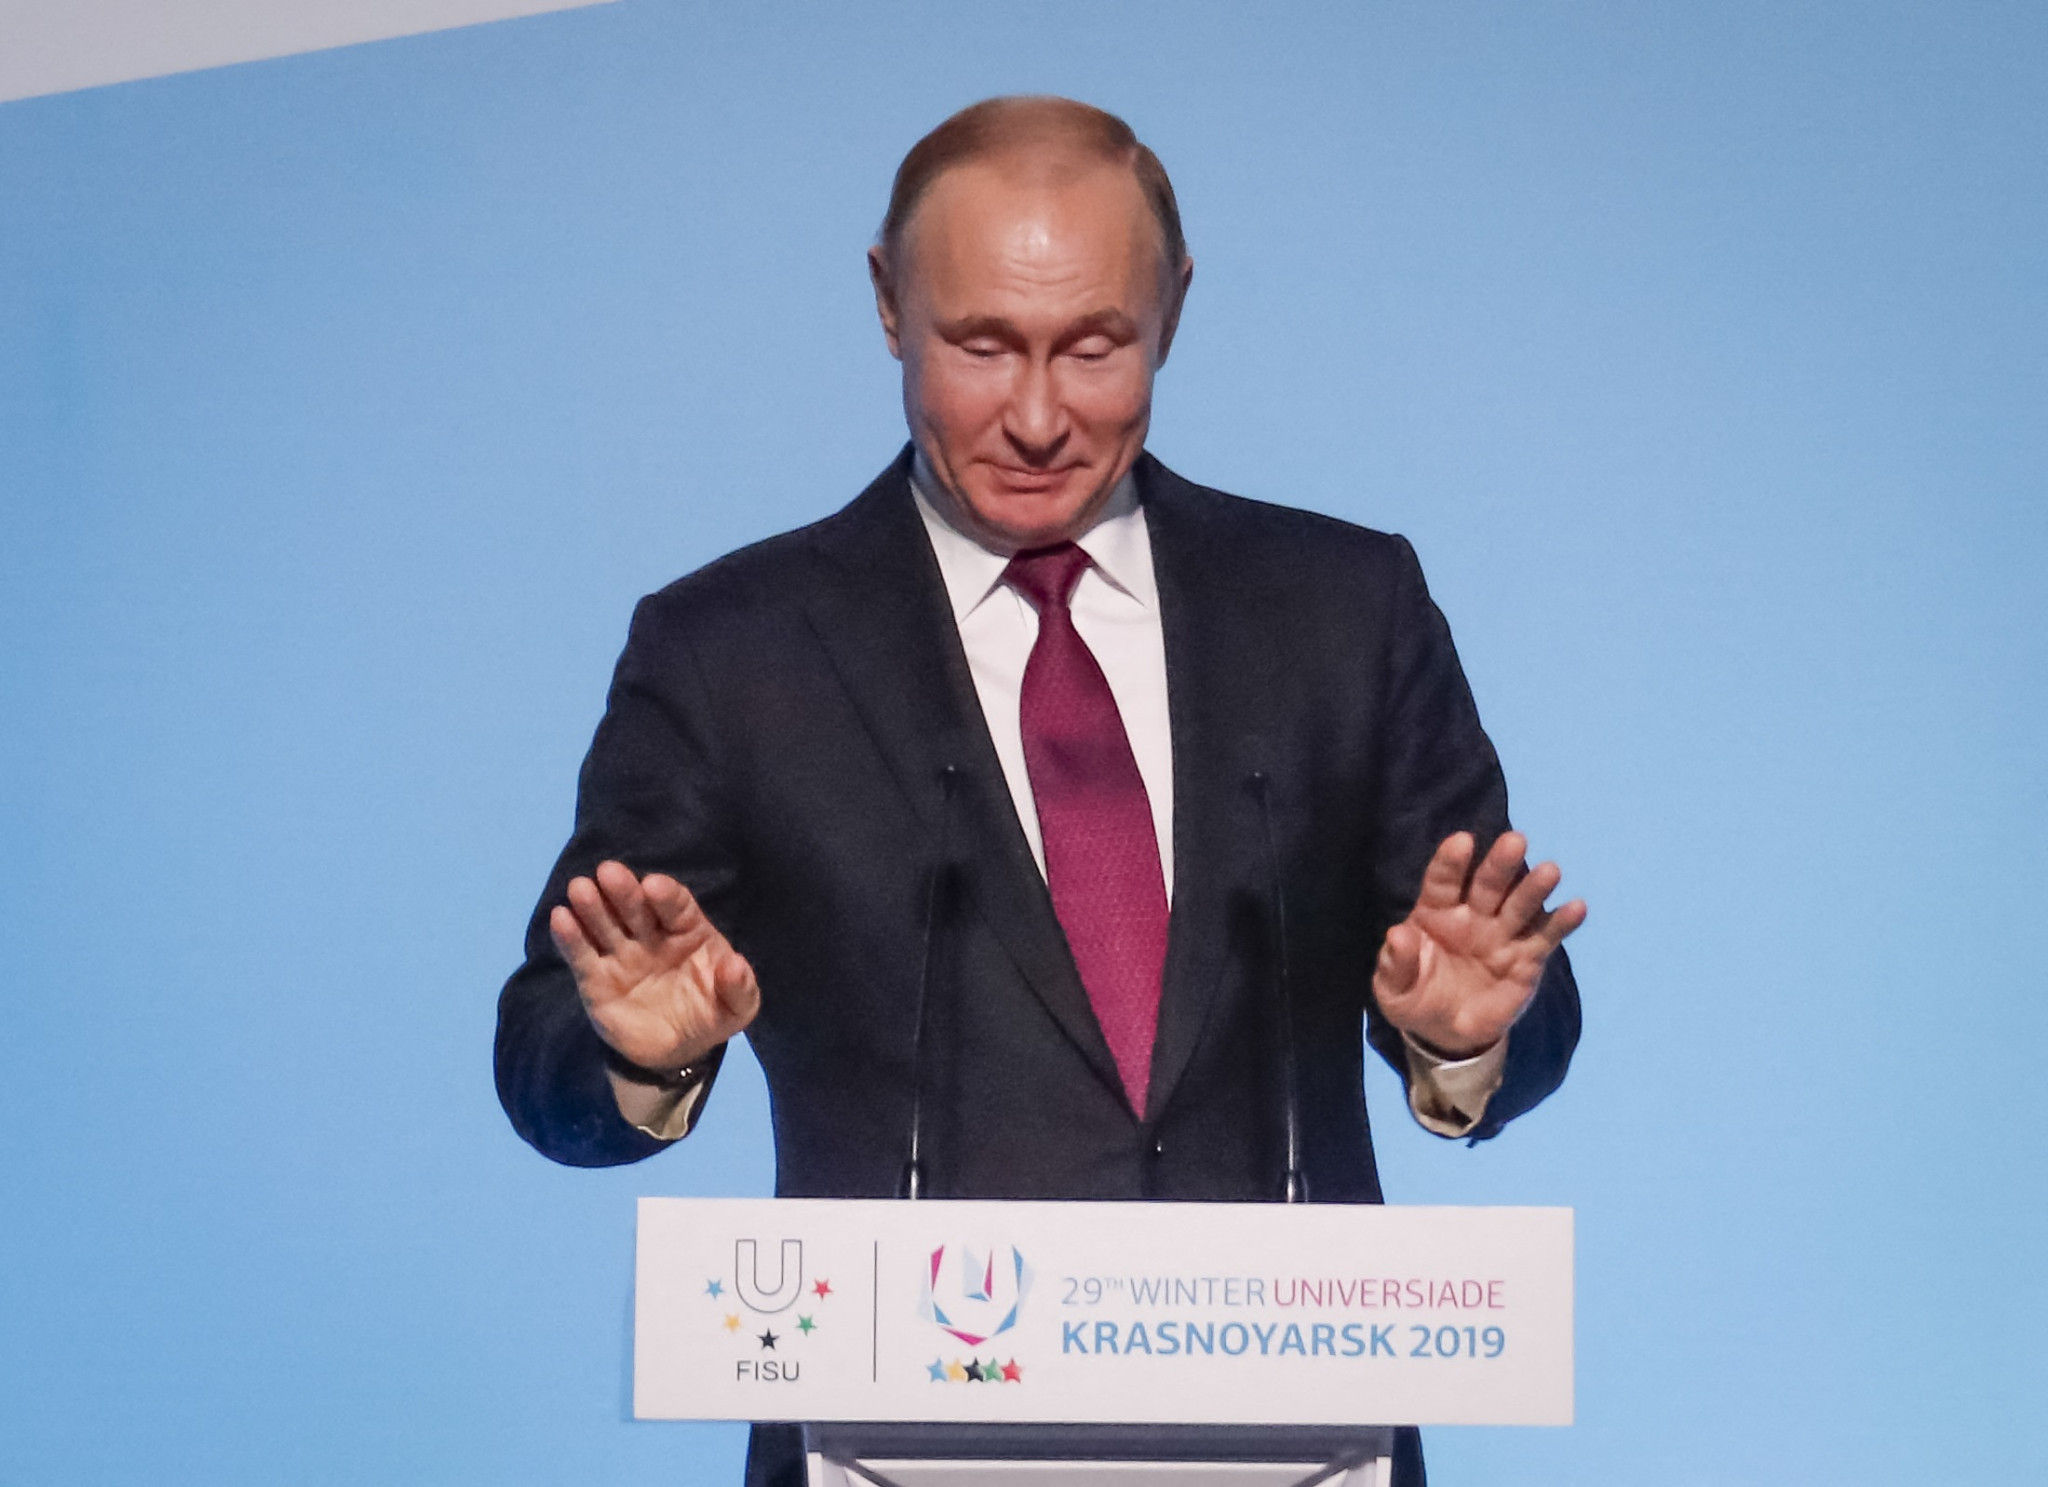 Russian President Vladimir Putin declared the Krasnoyarsk 2019 Winter Universiade open ©Getty Images